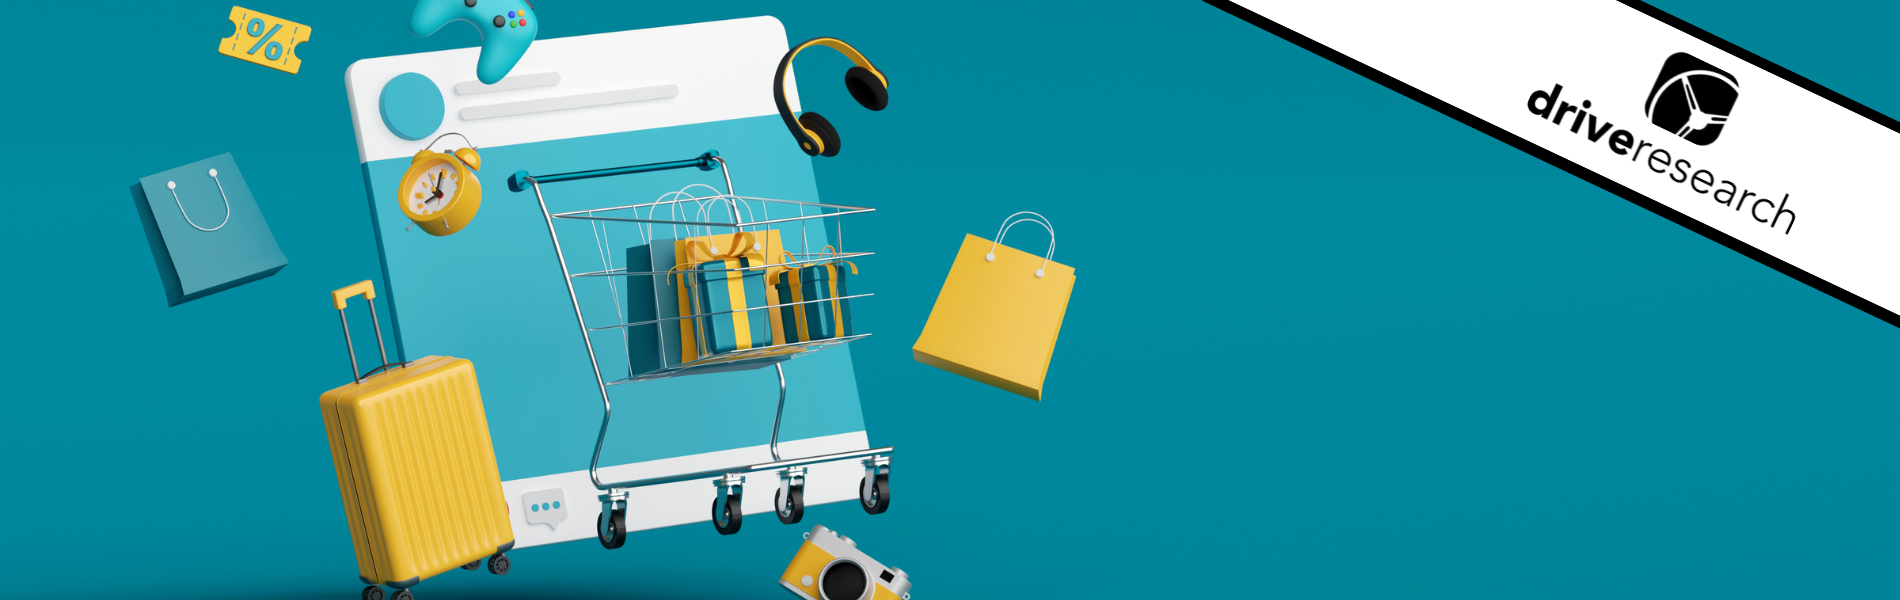 E-commerce concept, Shopping online advertisement on social